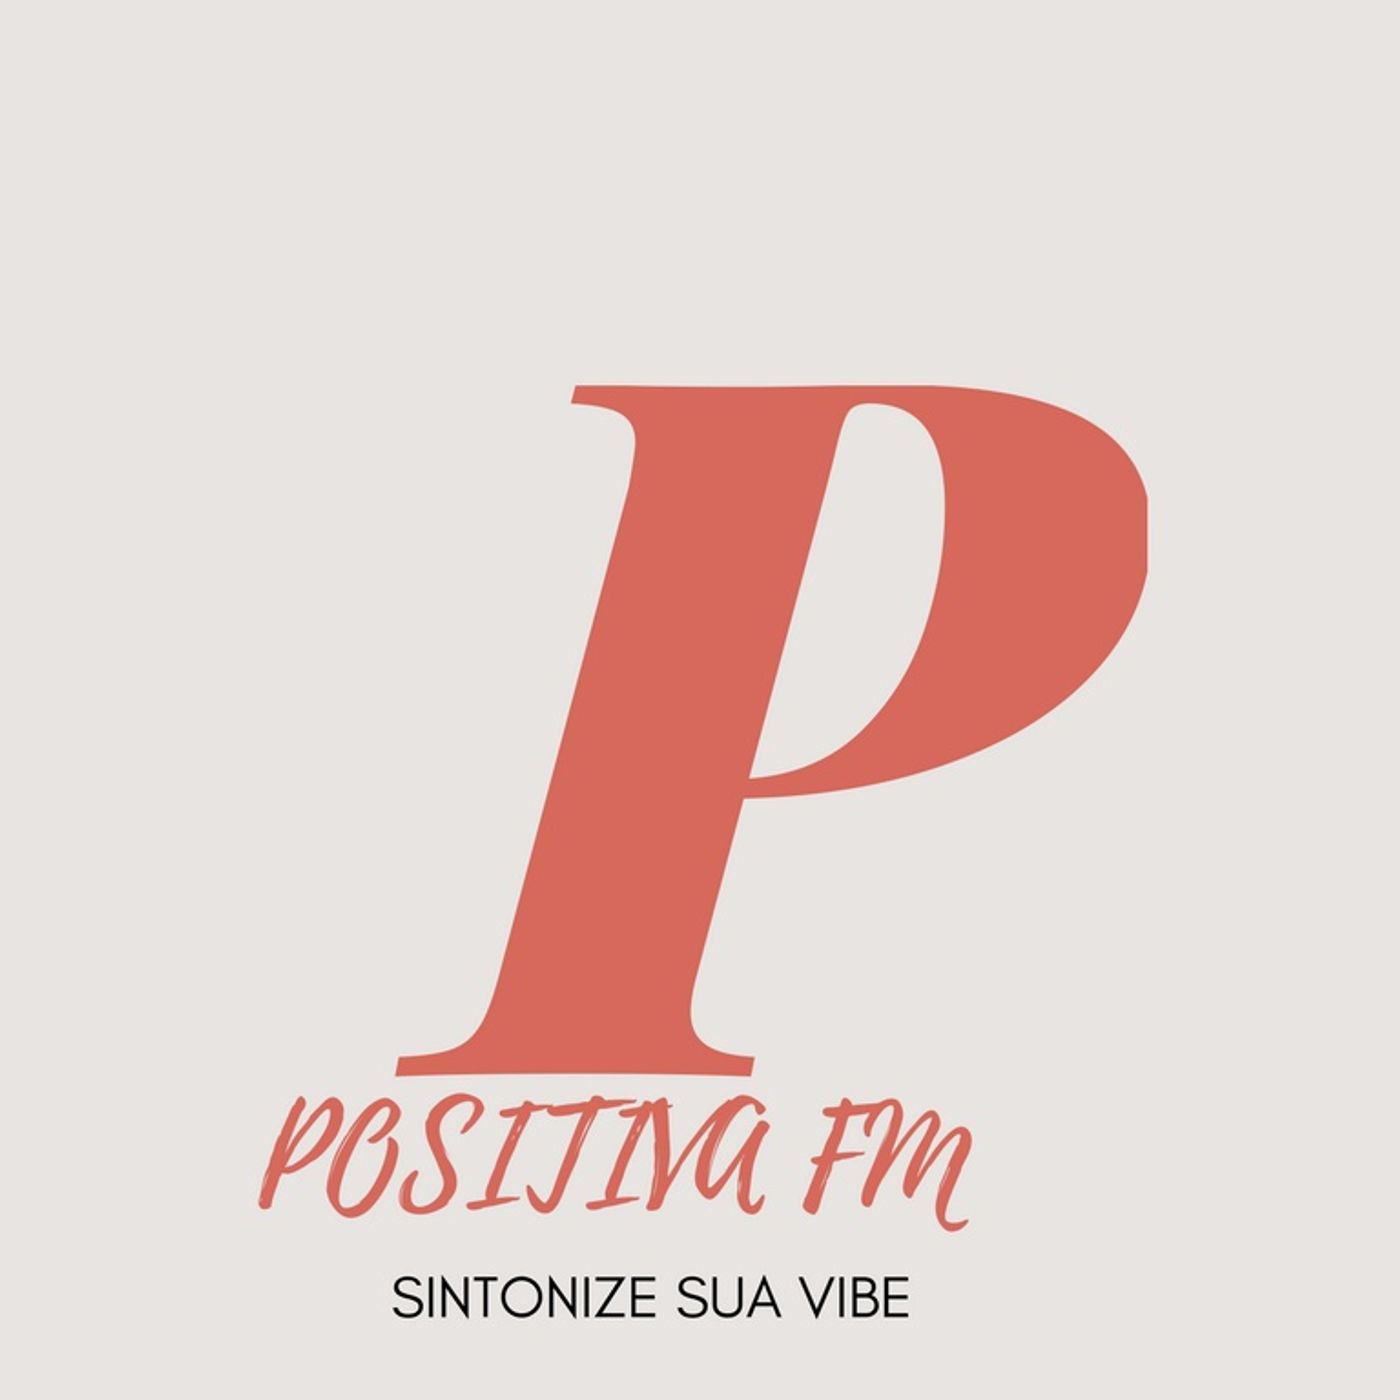 Positiva FM's show